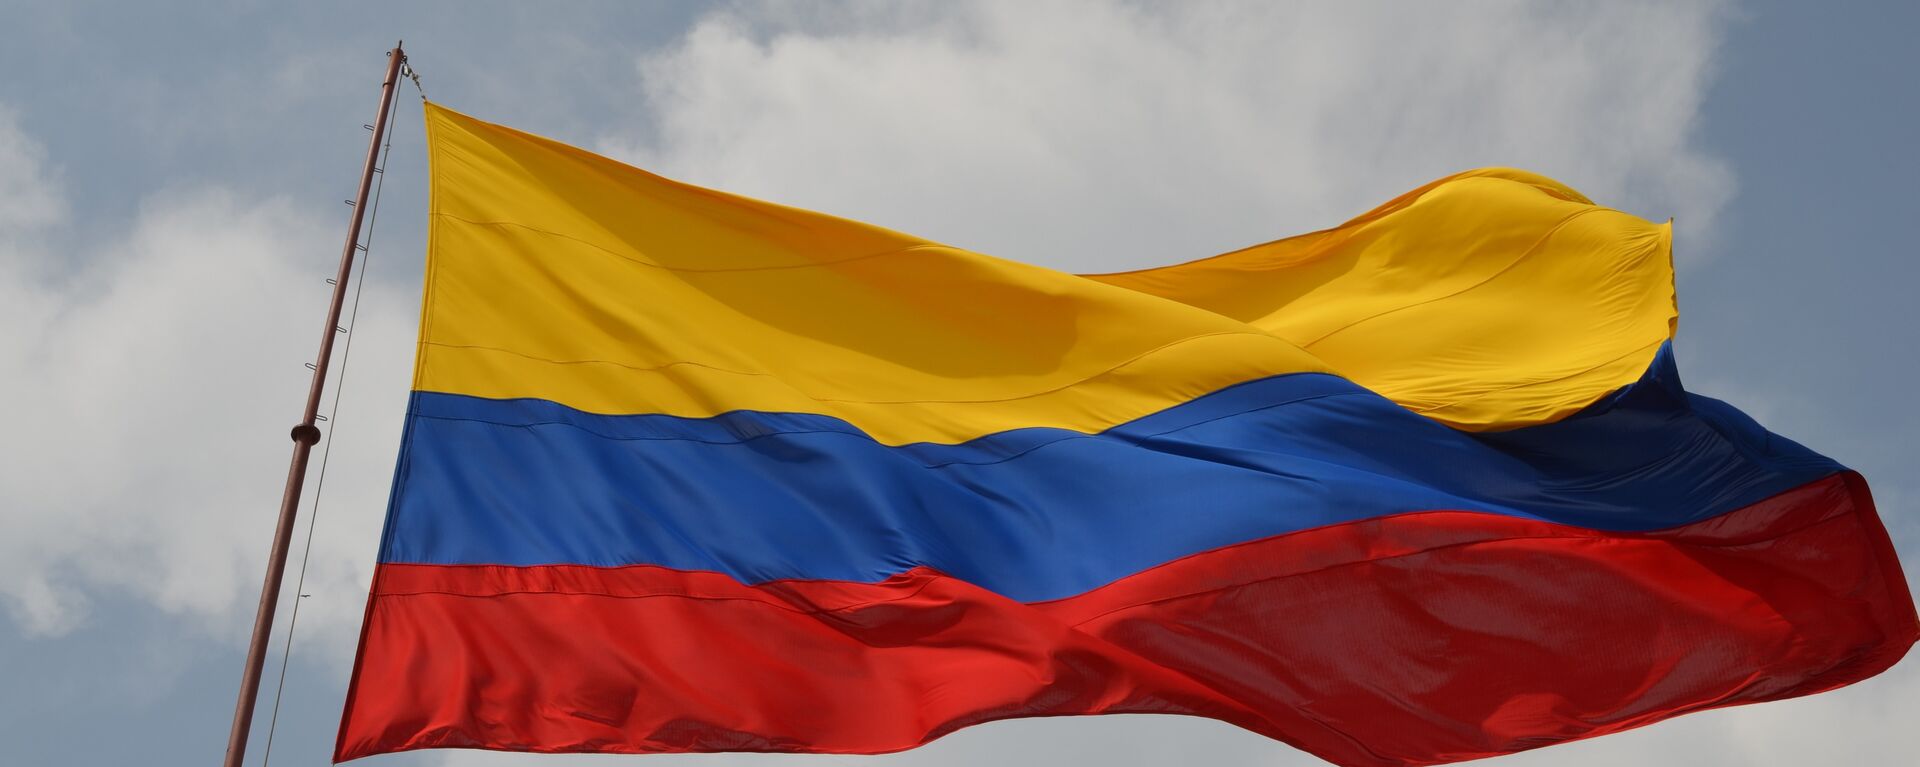 Bandera de Colombia - Sputnik Mundo, 1920, 24.06.2021